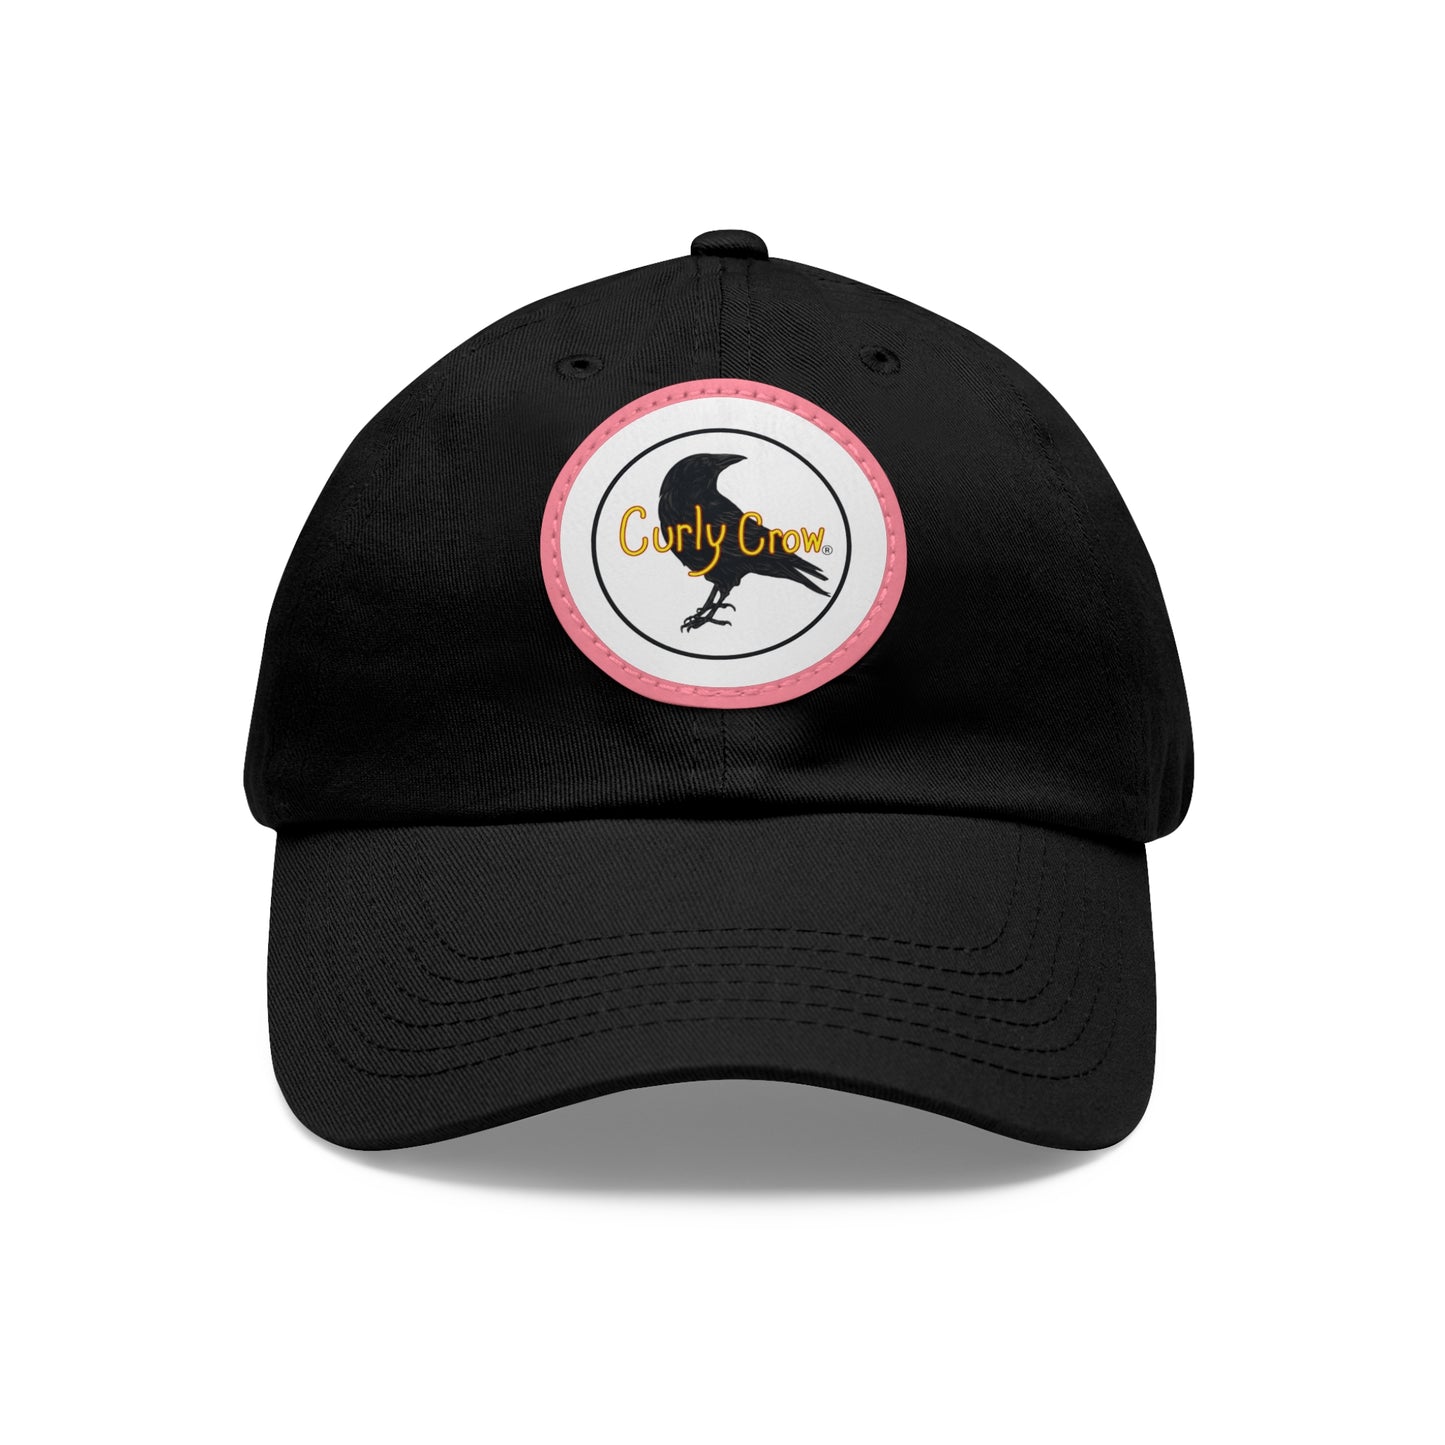 Curly Crow cap - baseball hat